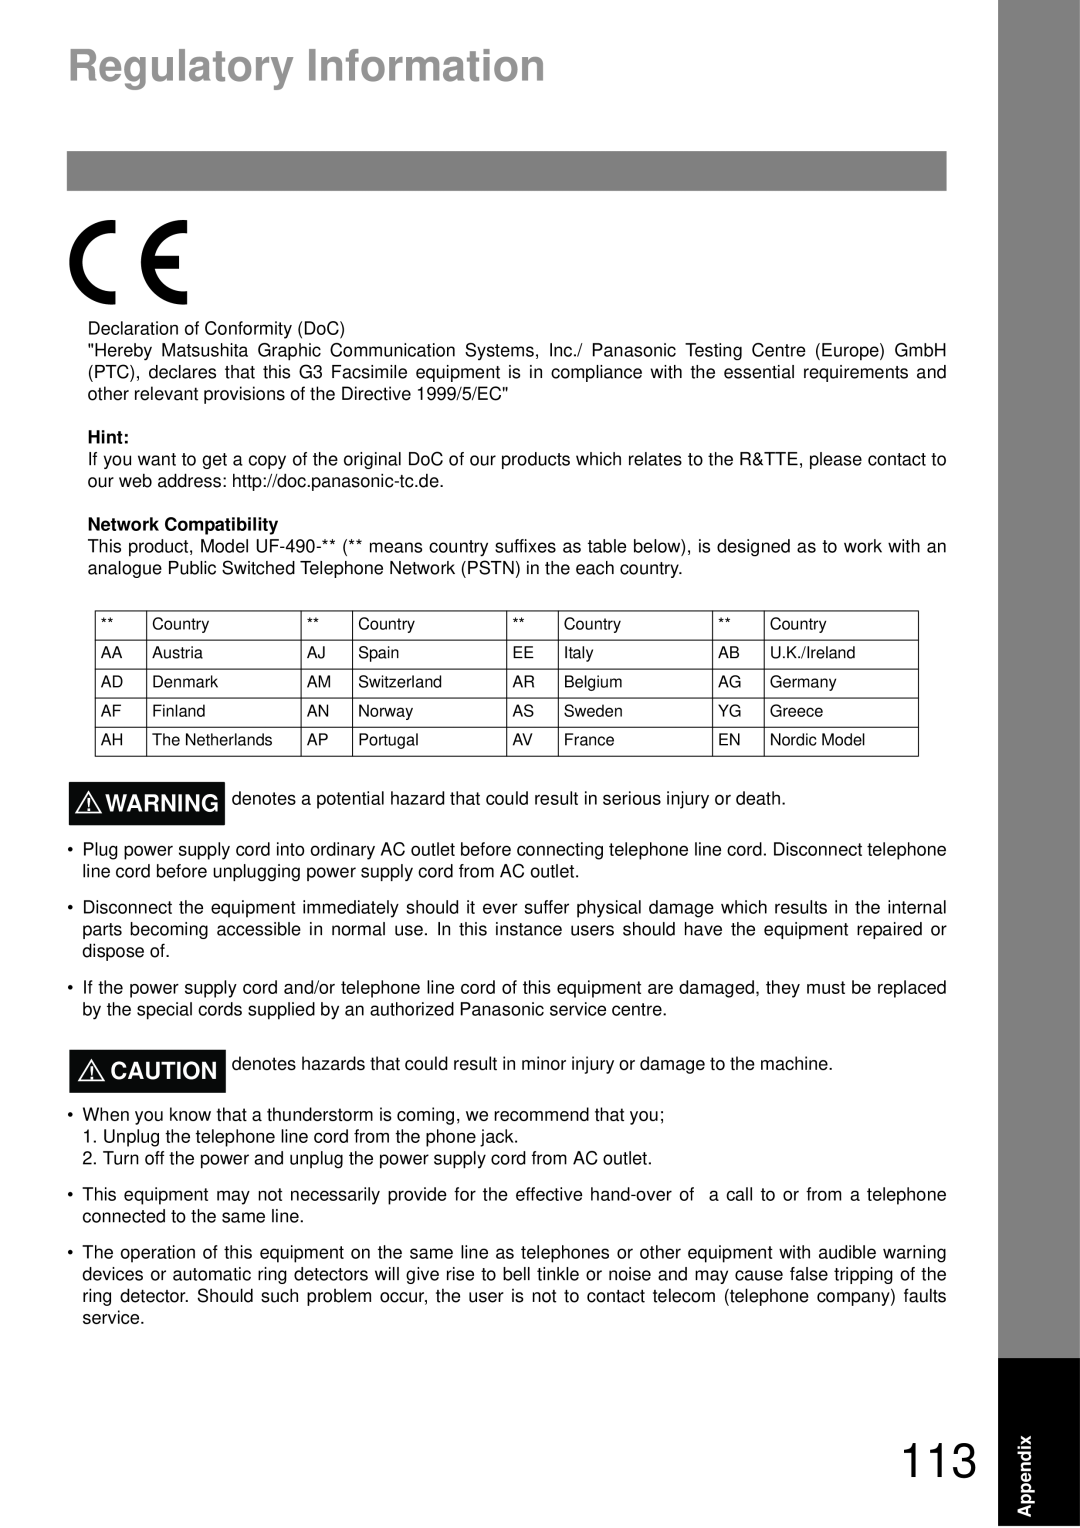 Castelle UF-490 appendix Regulatory Information, Hint, Network Compatibility 